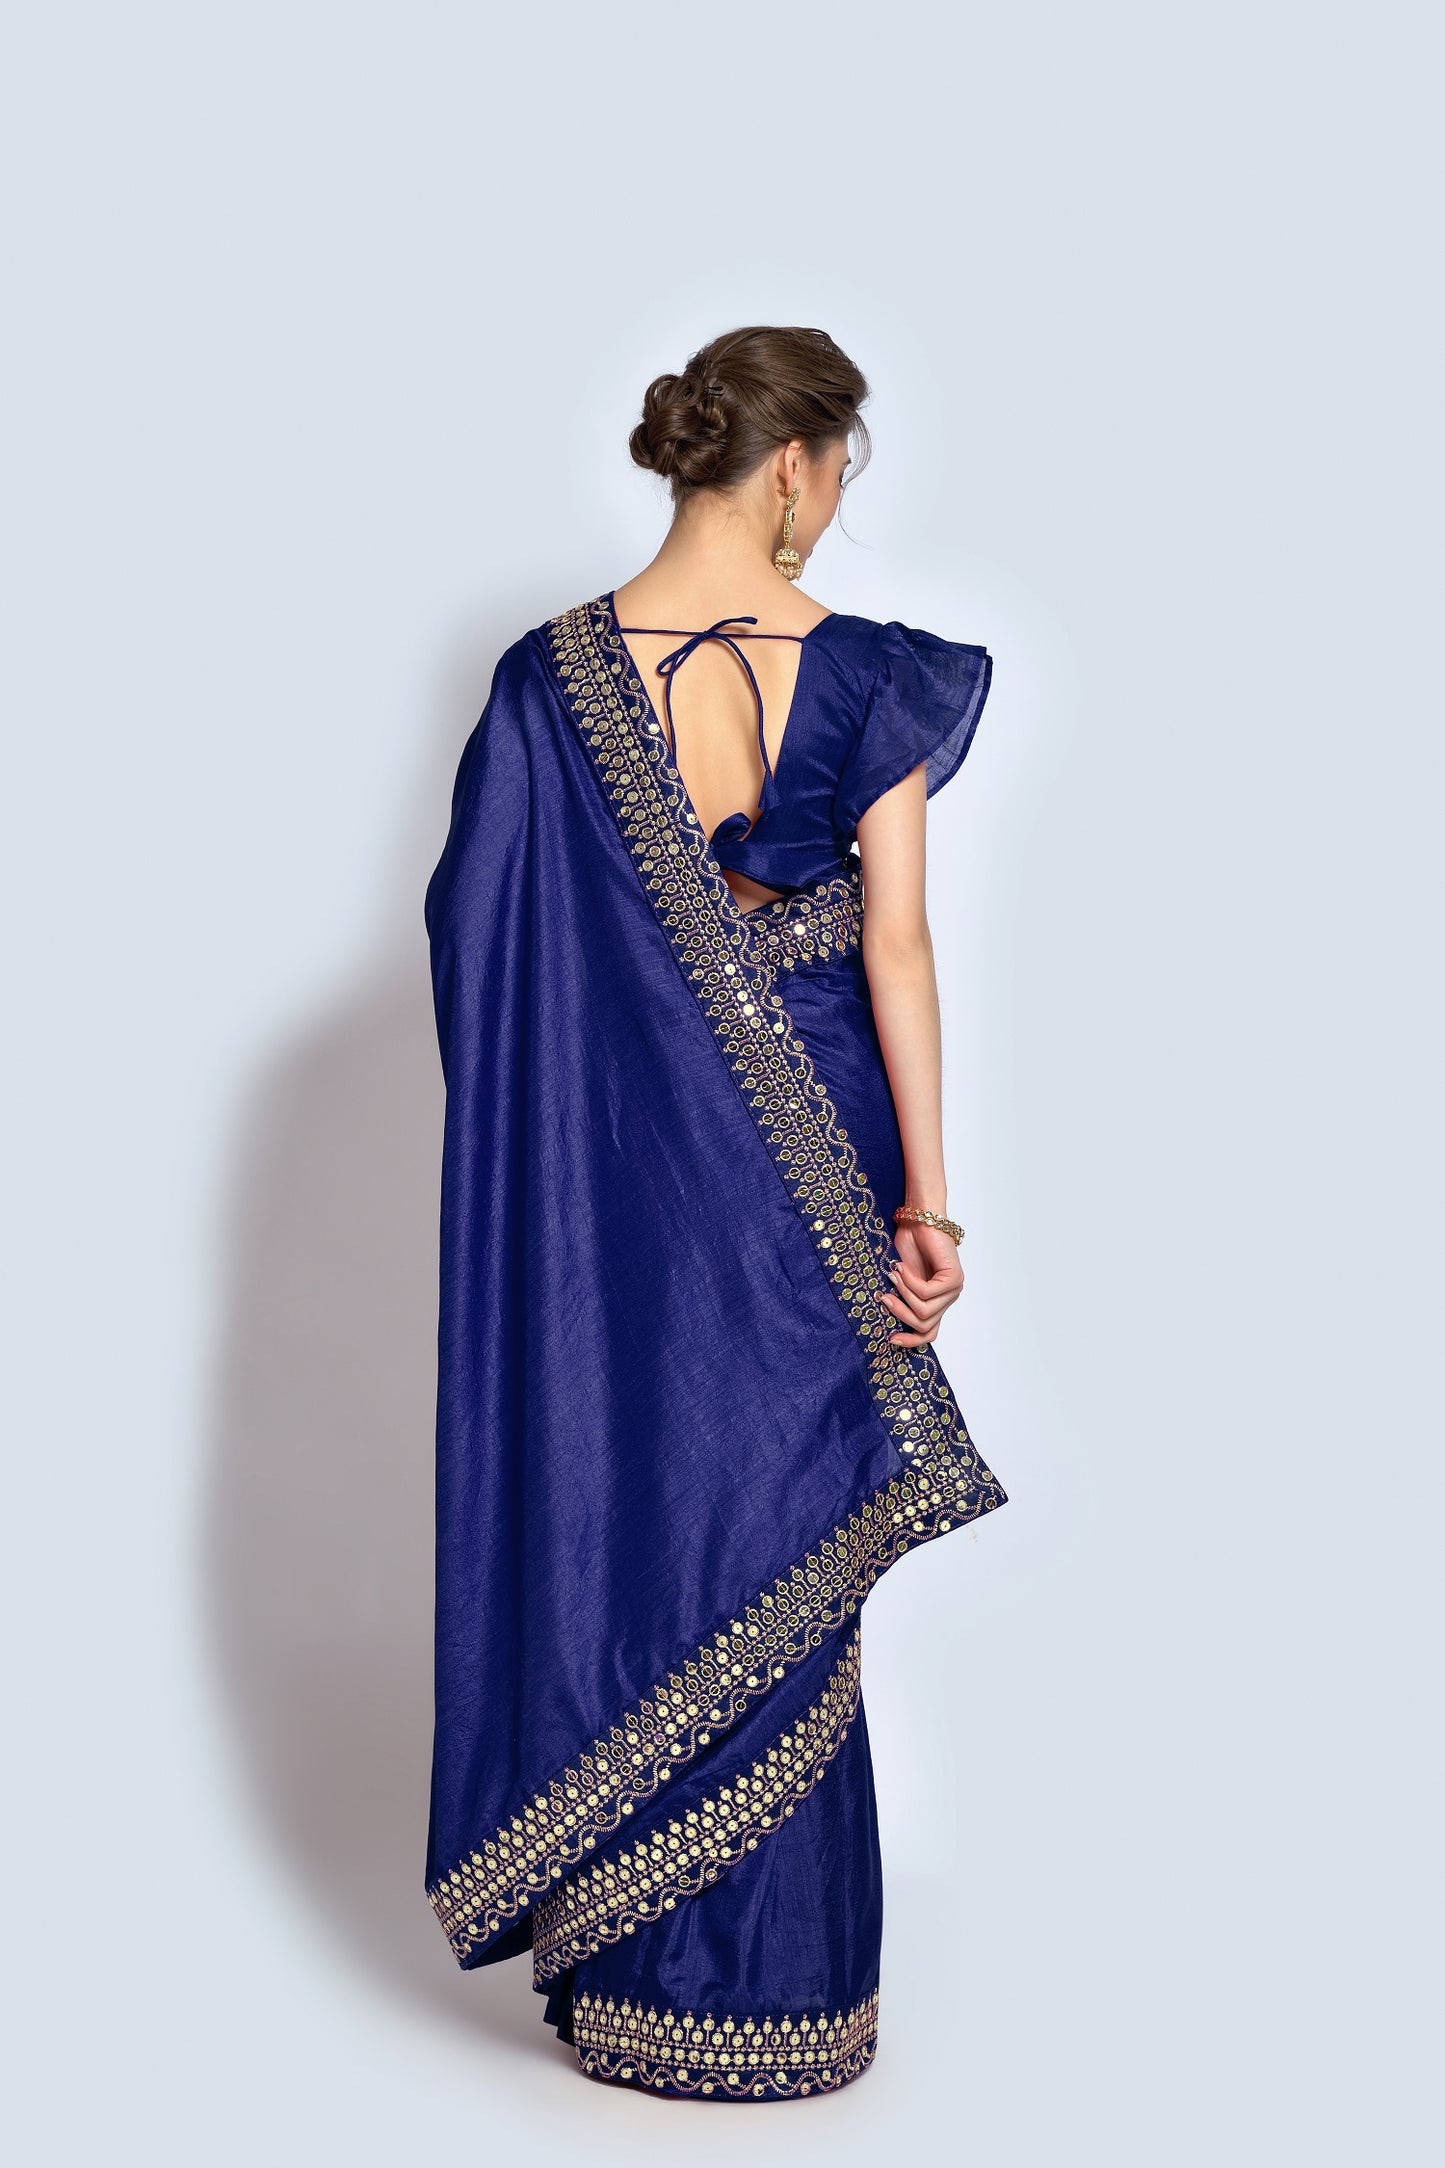 Buy Vichitra Silk Navy Blue Saree Online